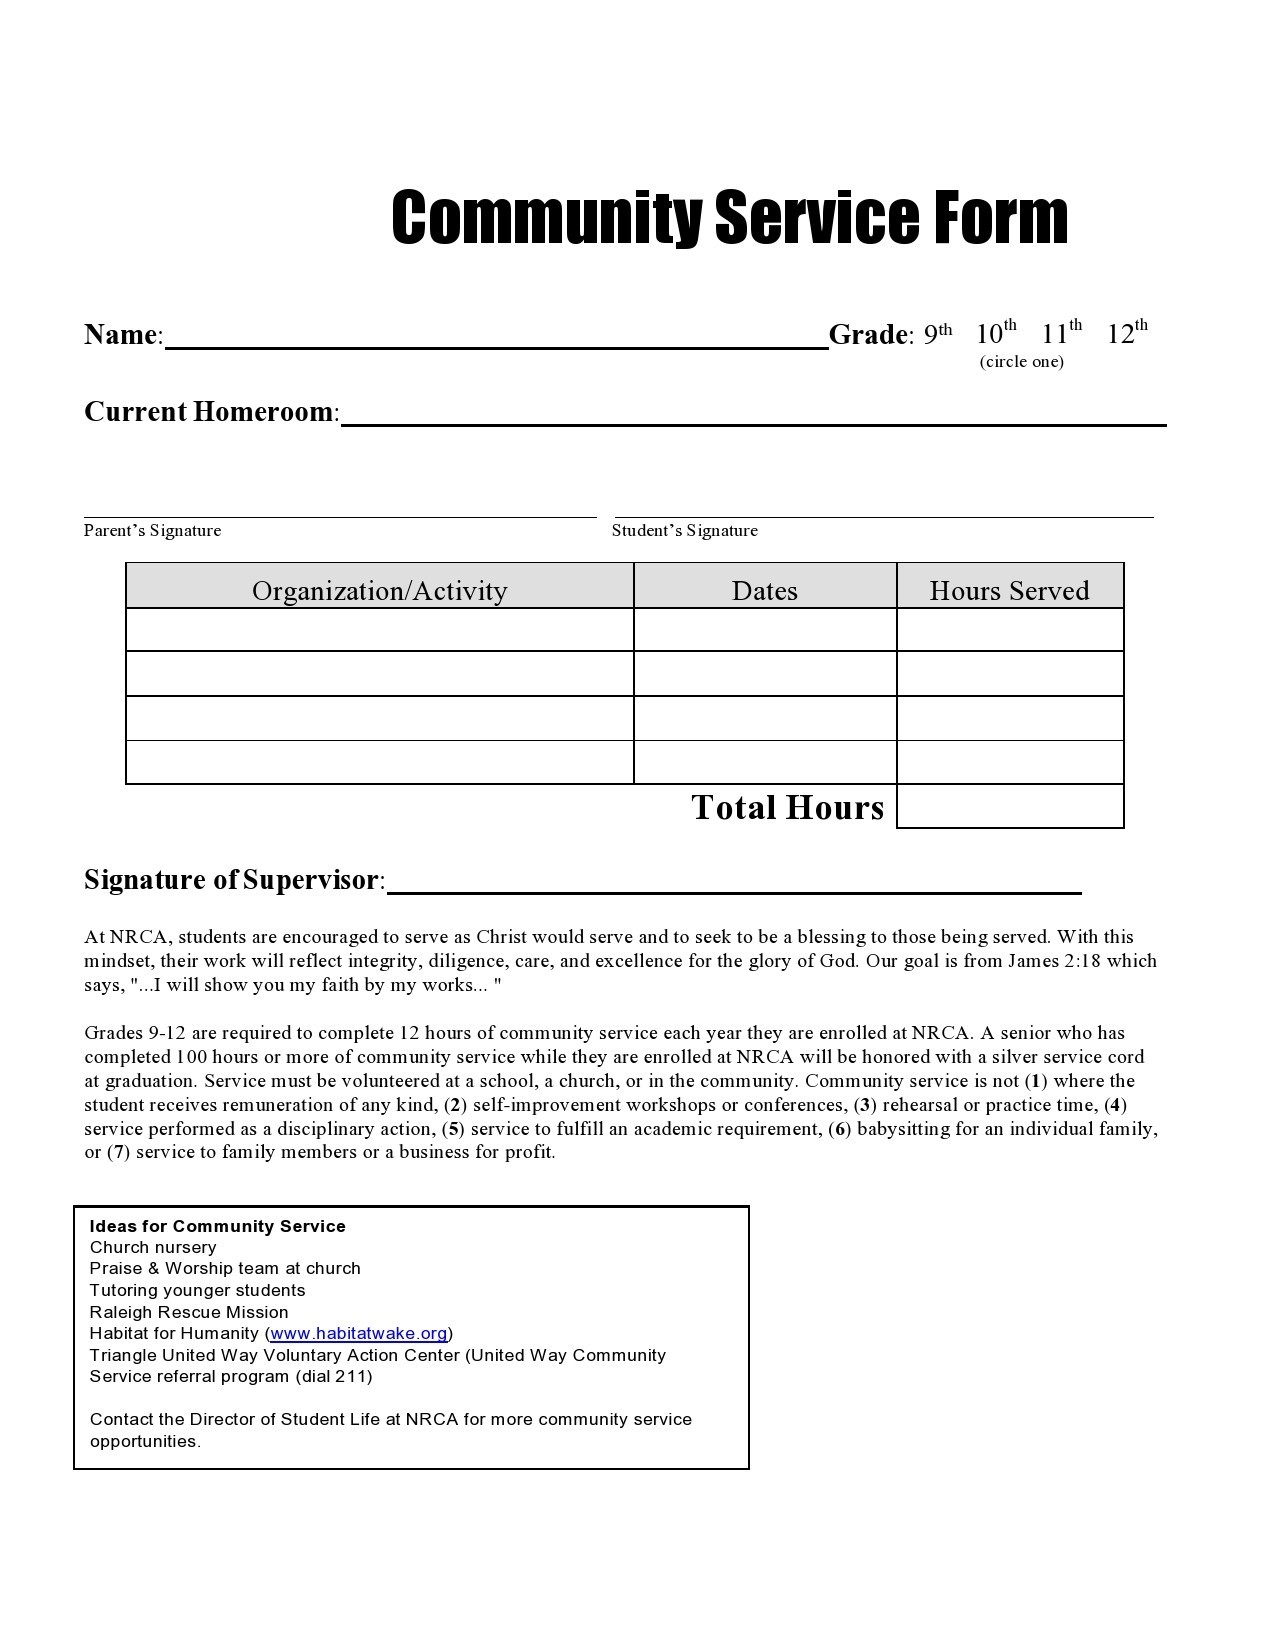 fillable-community-service-registration-form-printable-pdf-download